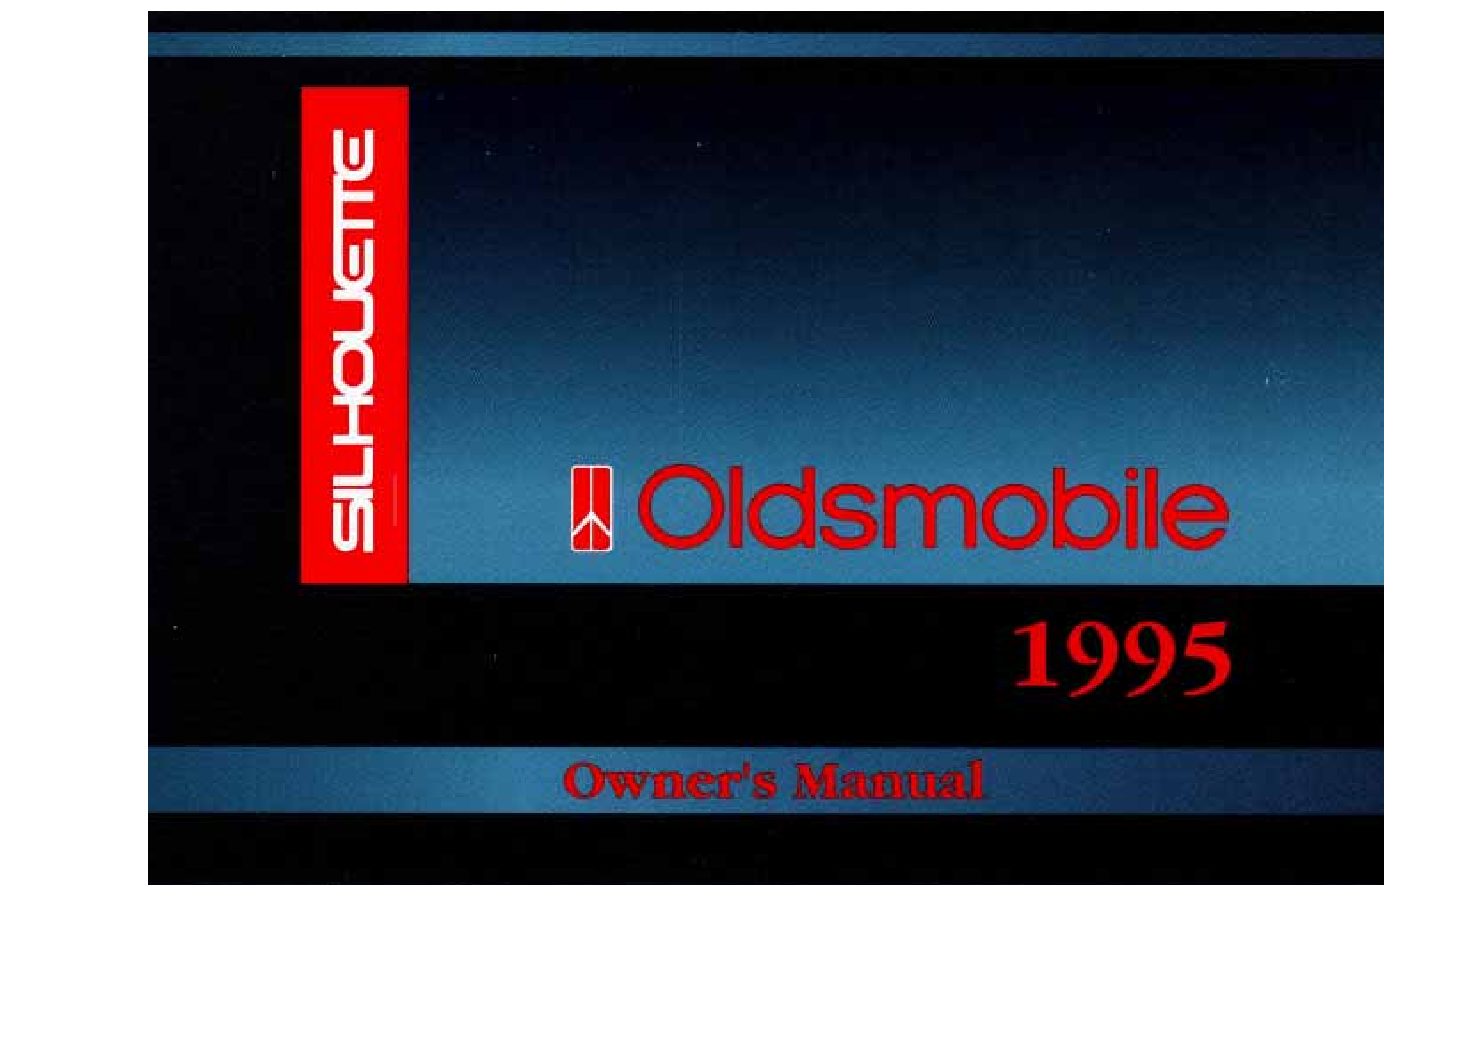 1995 Oldsmobile Silhouette Image